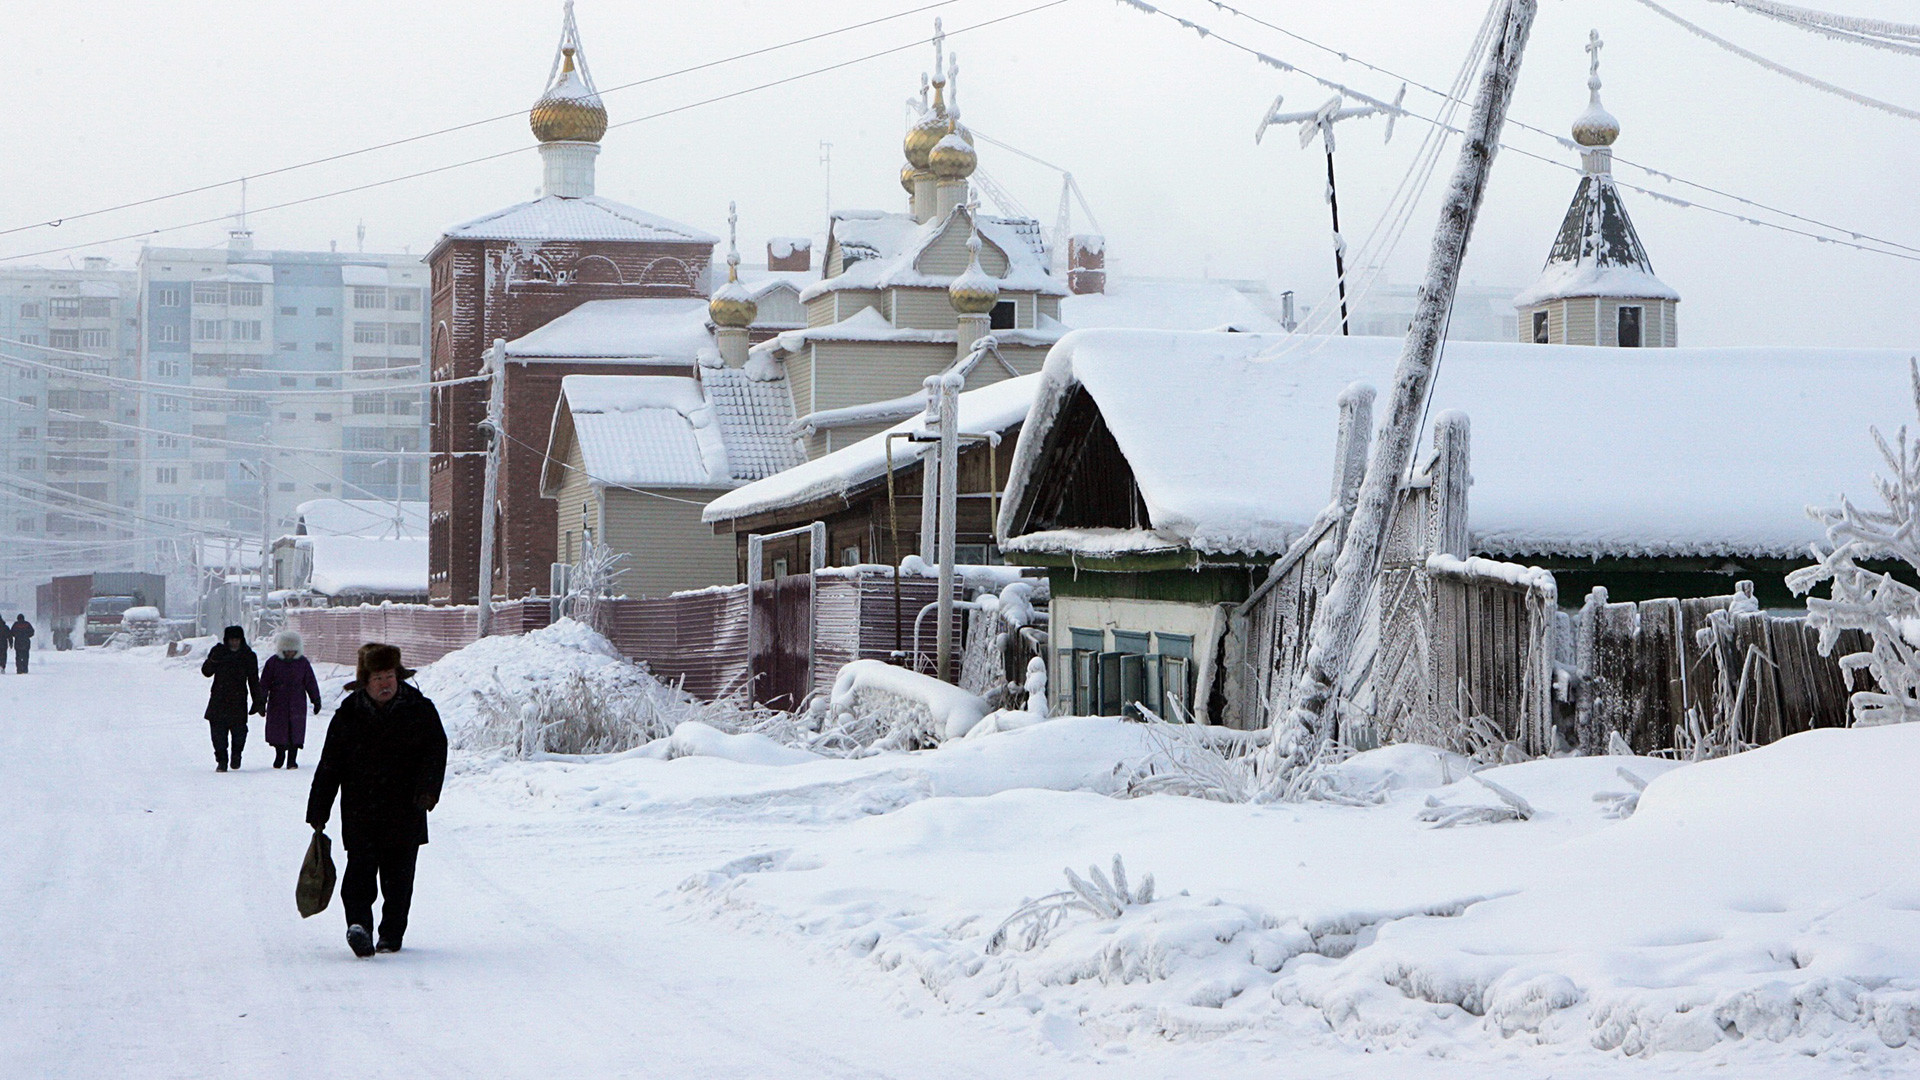 Streets of Yakutsk

